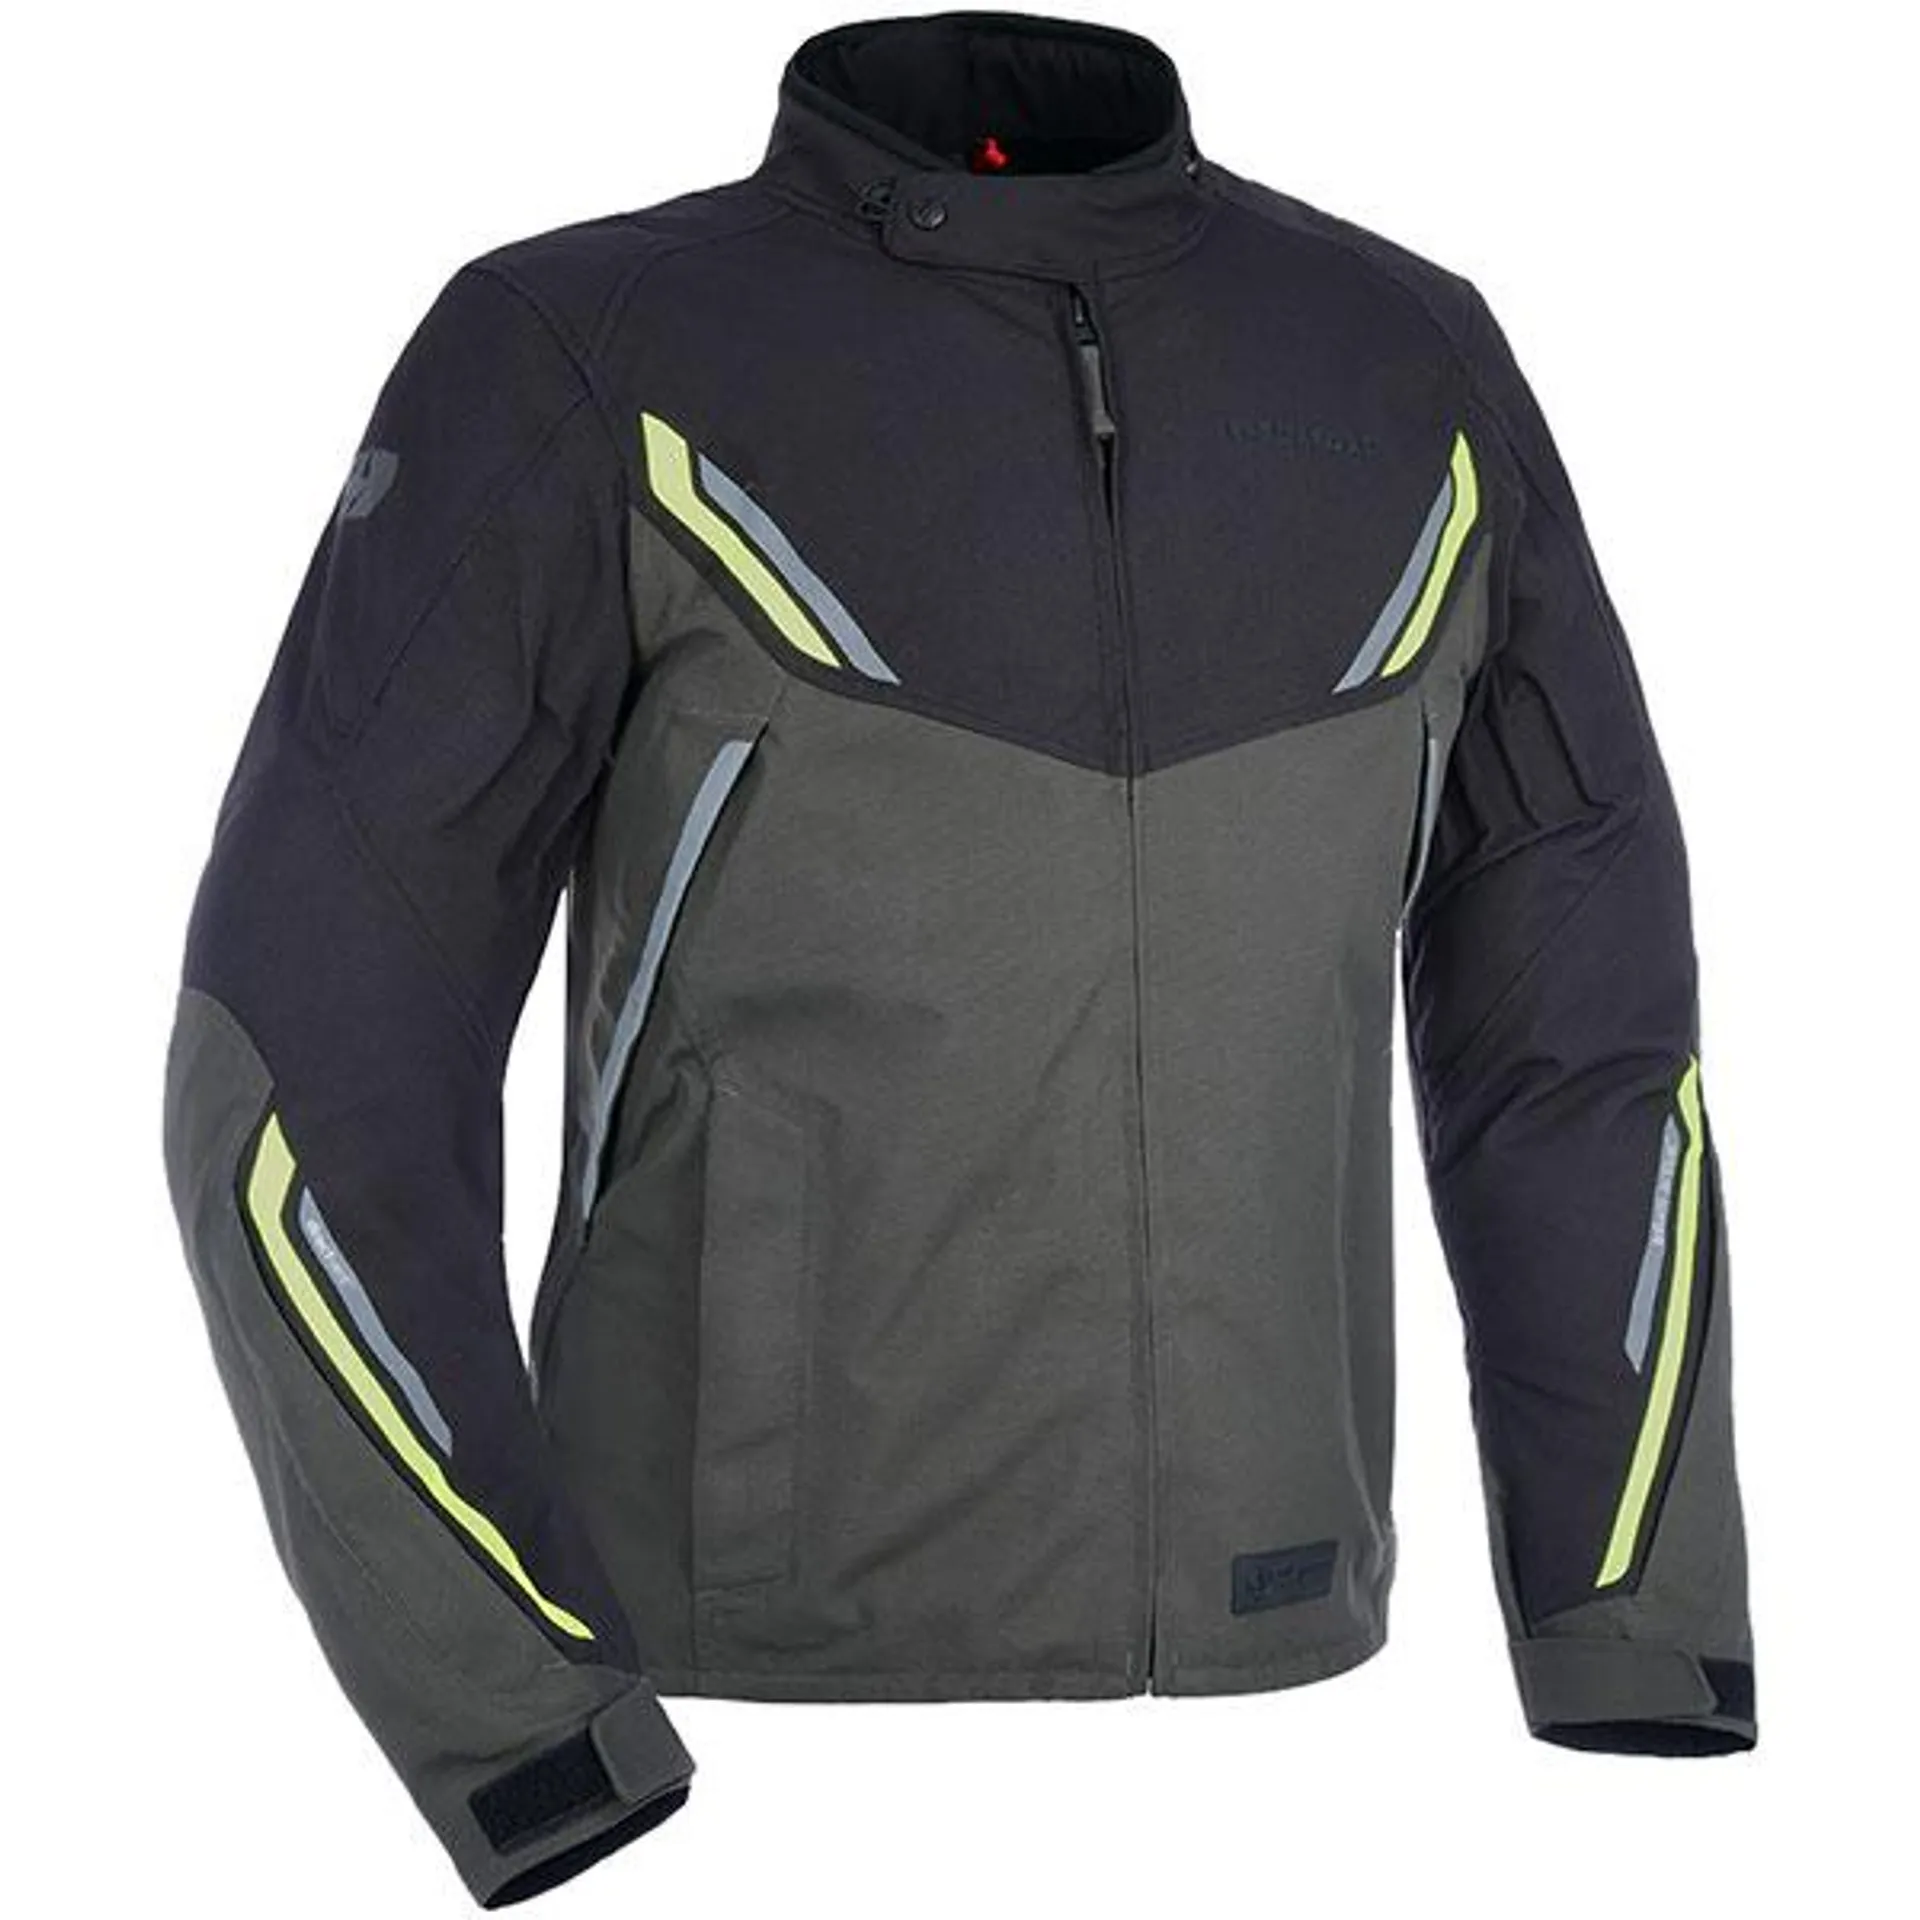 Oxford Hinterland Advanced Textile Jacket - Black / Grey / Fluo